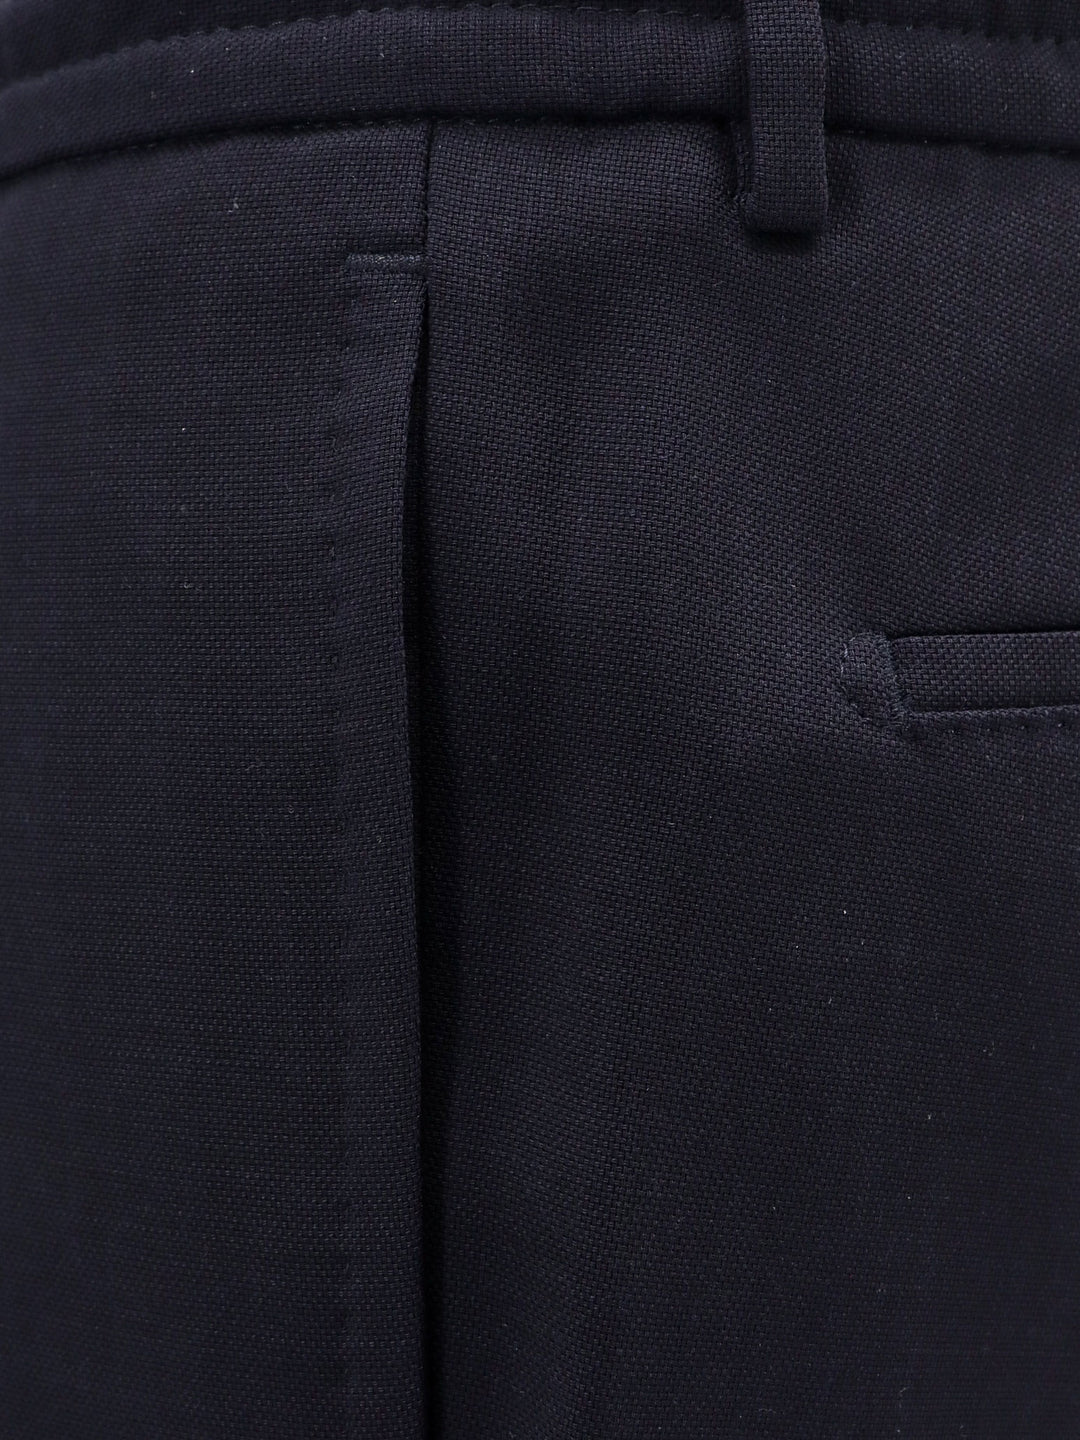 Pantalone in lana vergine con fascia elastica in vita